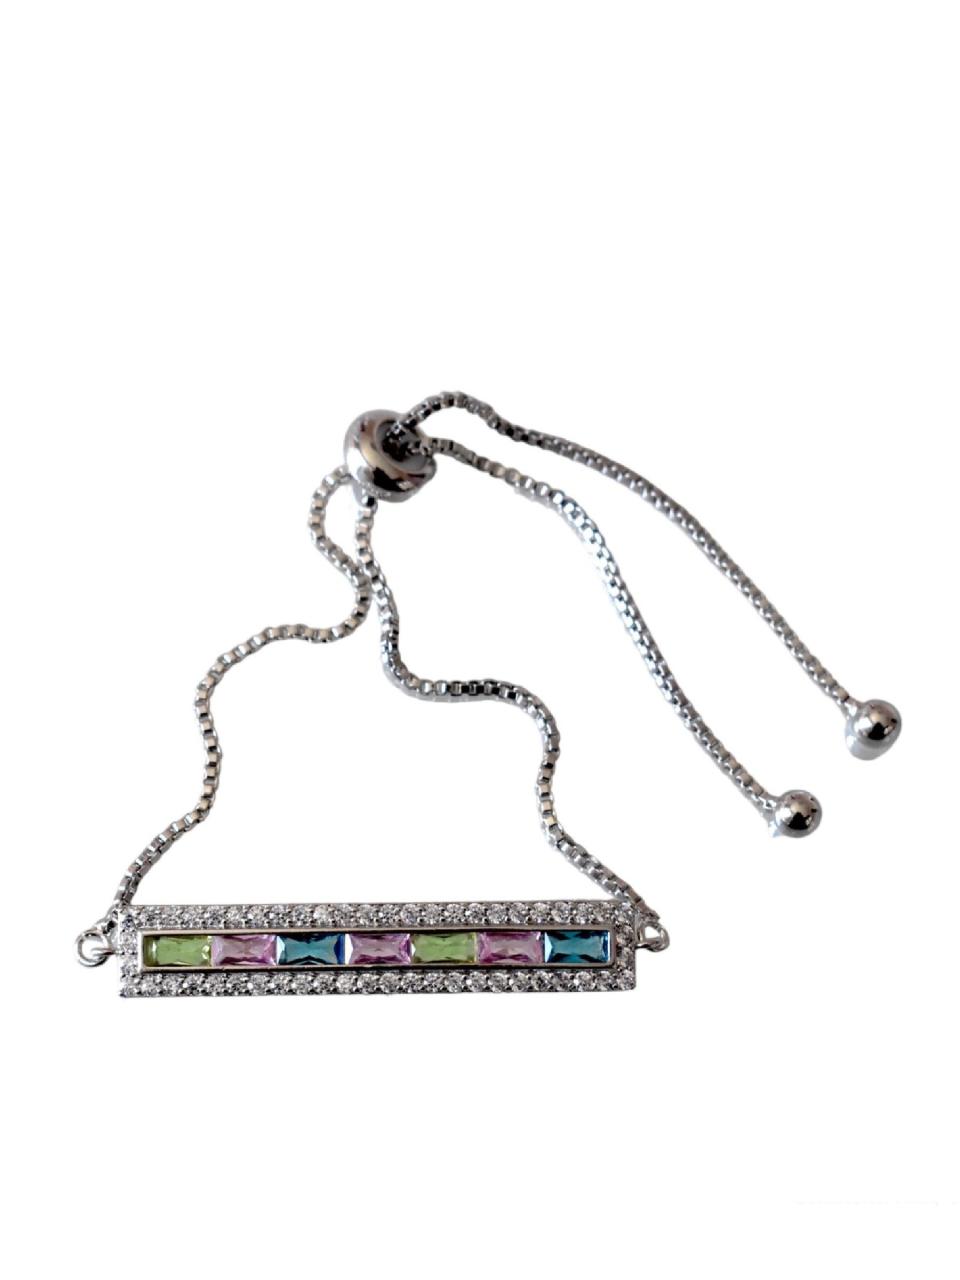 Art Deco Chain Bracelet, $44.